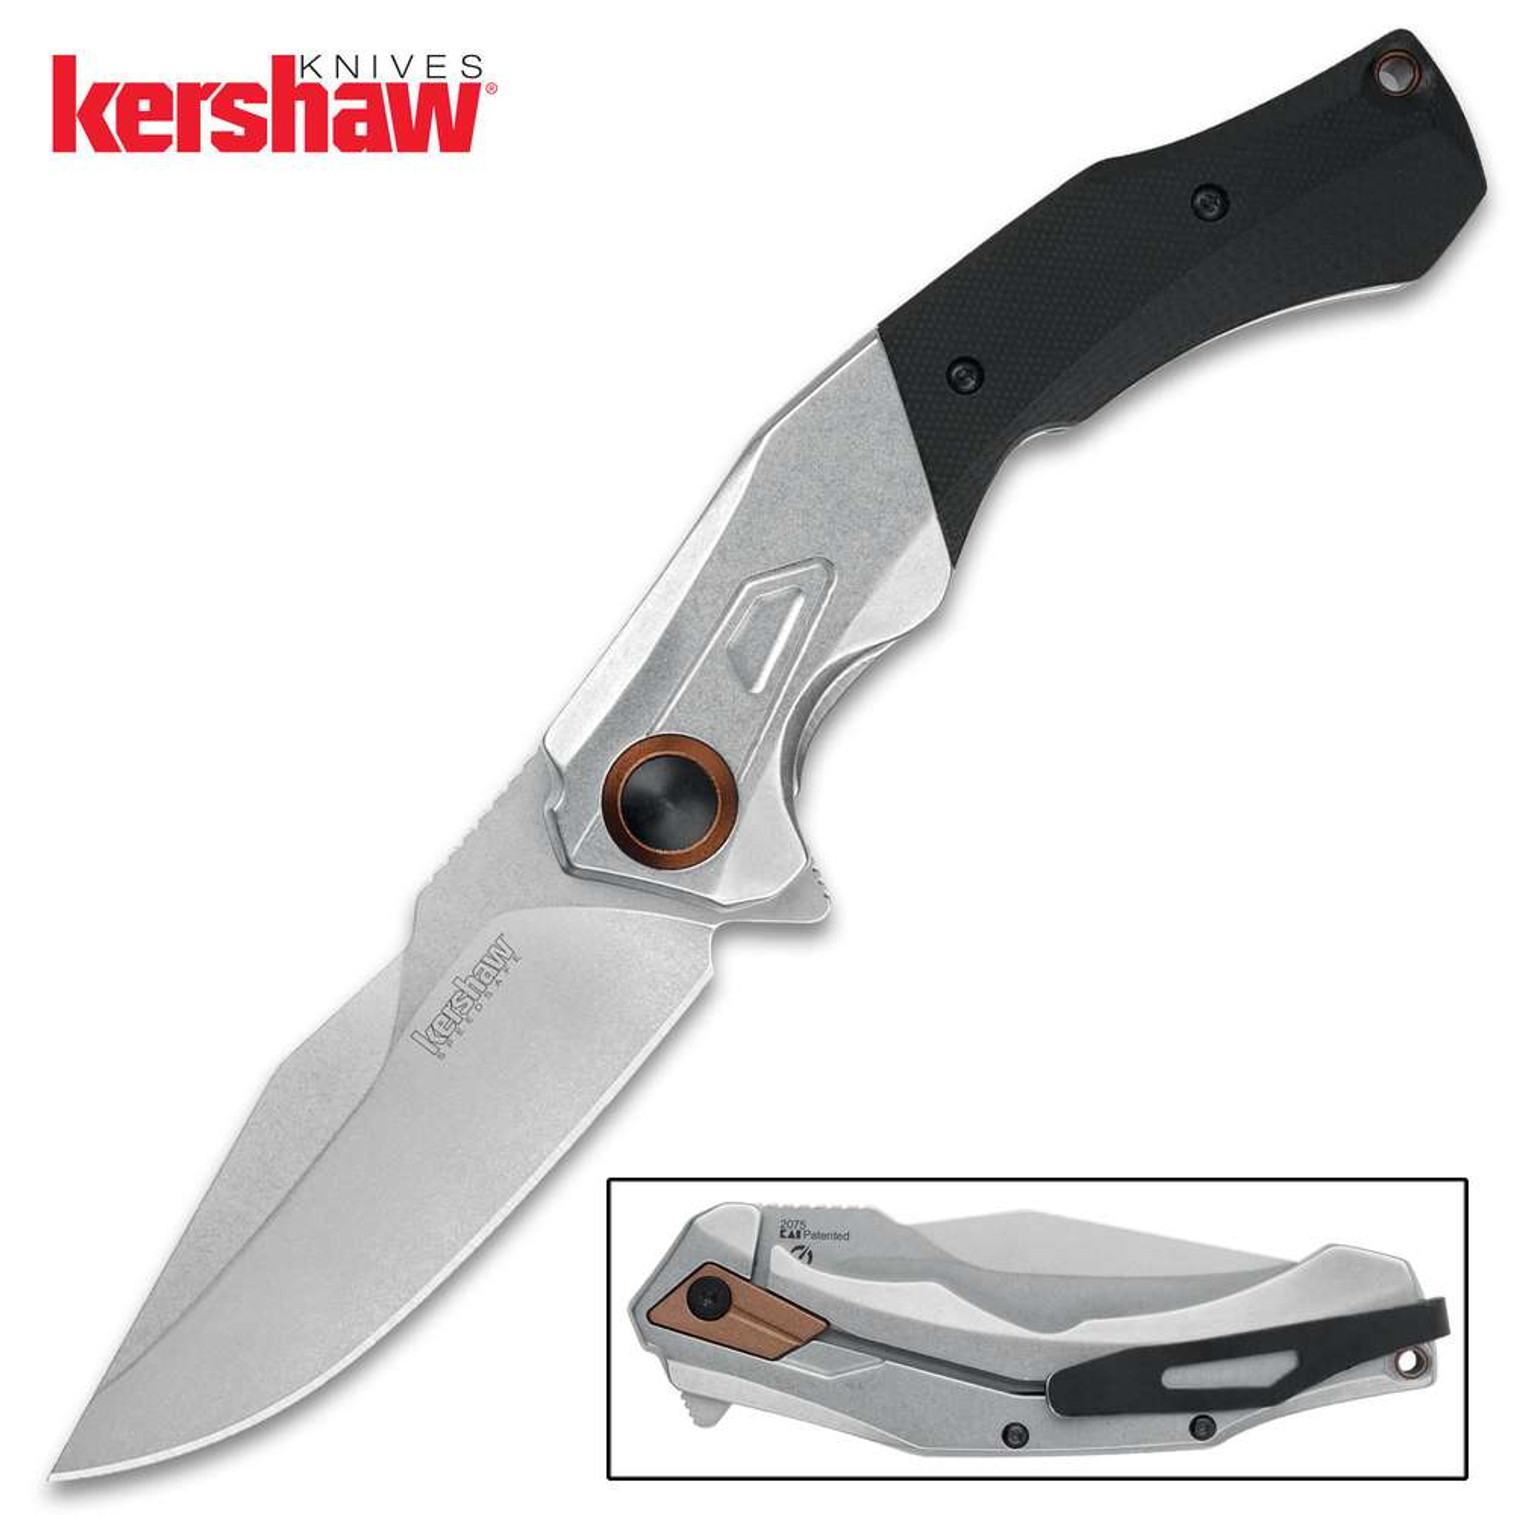 Kershaw Payout Pocket Knife - D2 Tool Steel